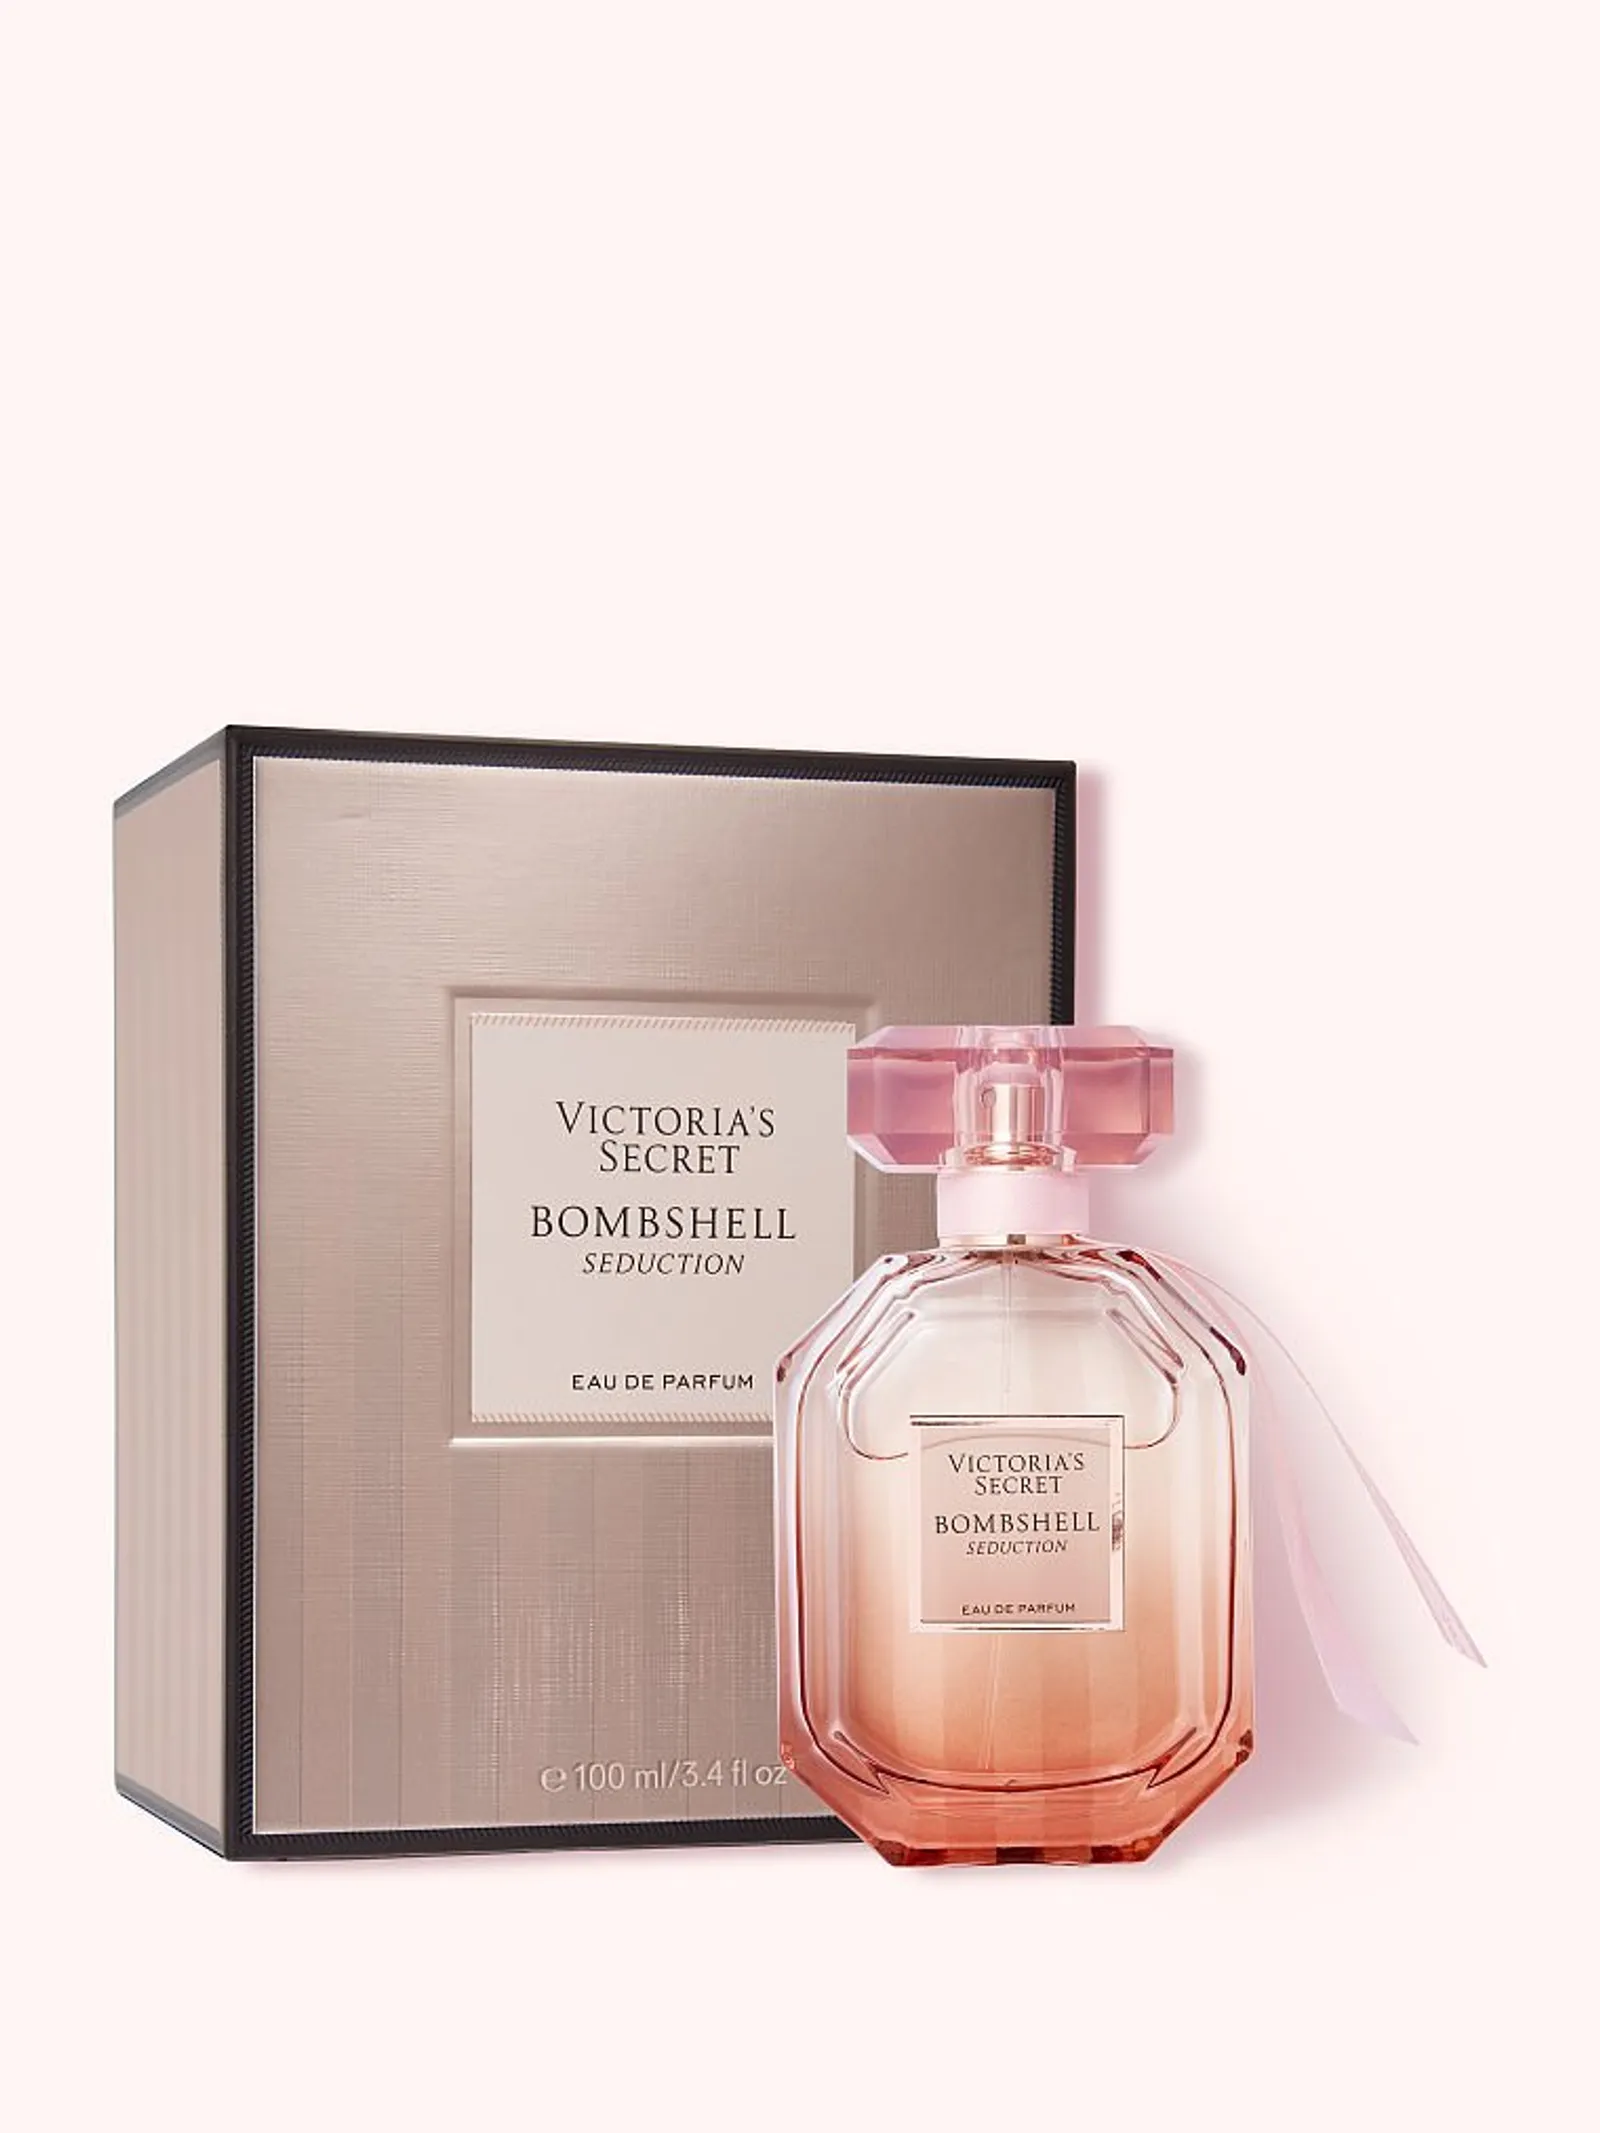 10 Rekomendasi Parfum Victoria's Secret yang Paling Wangi